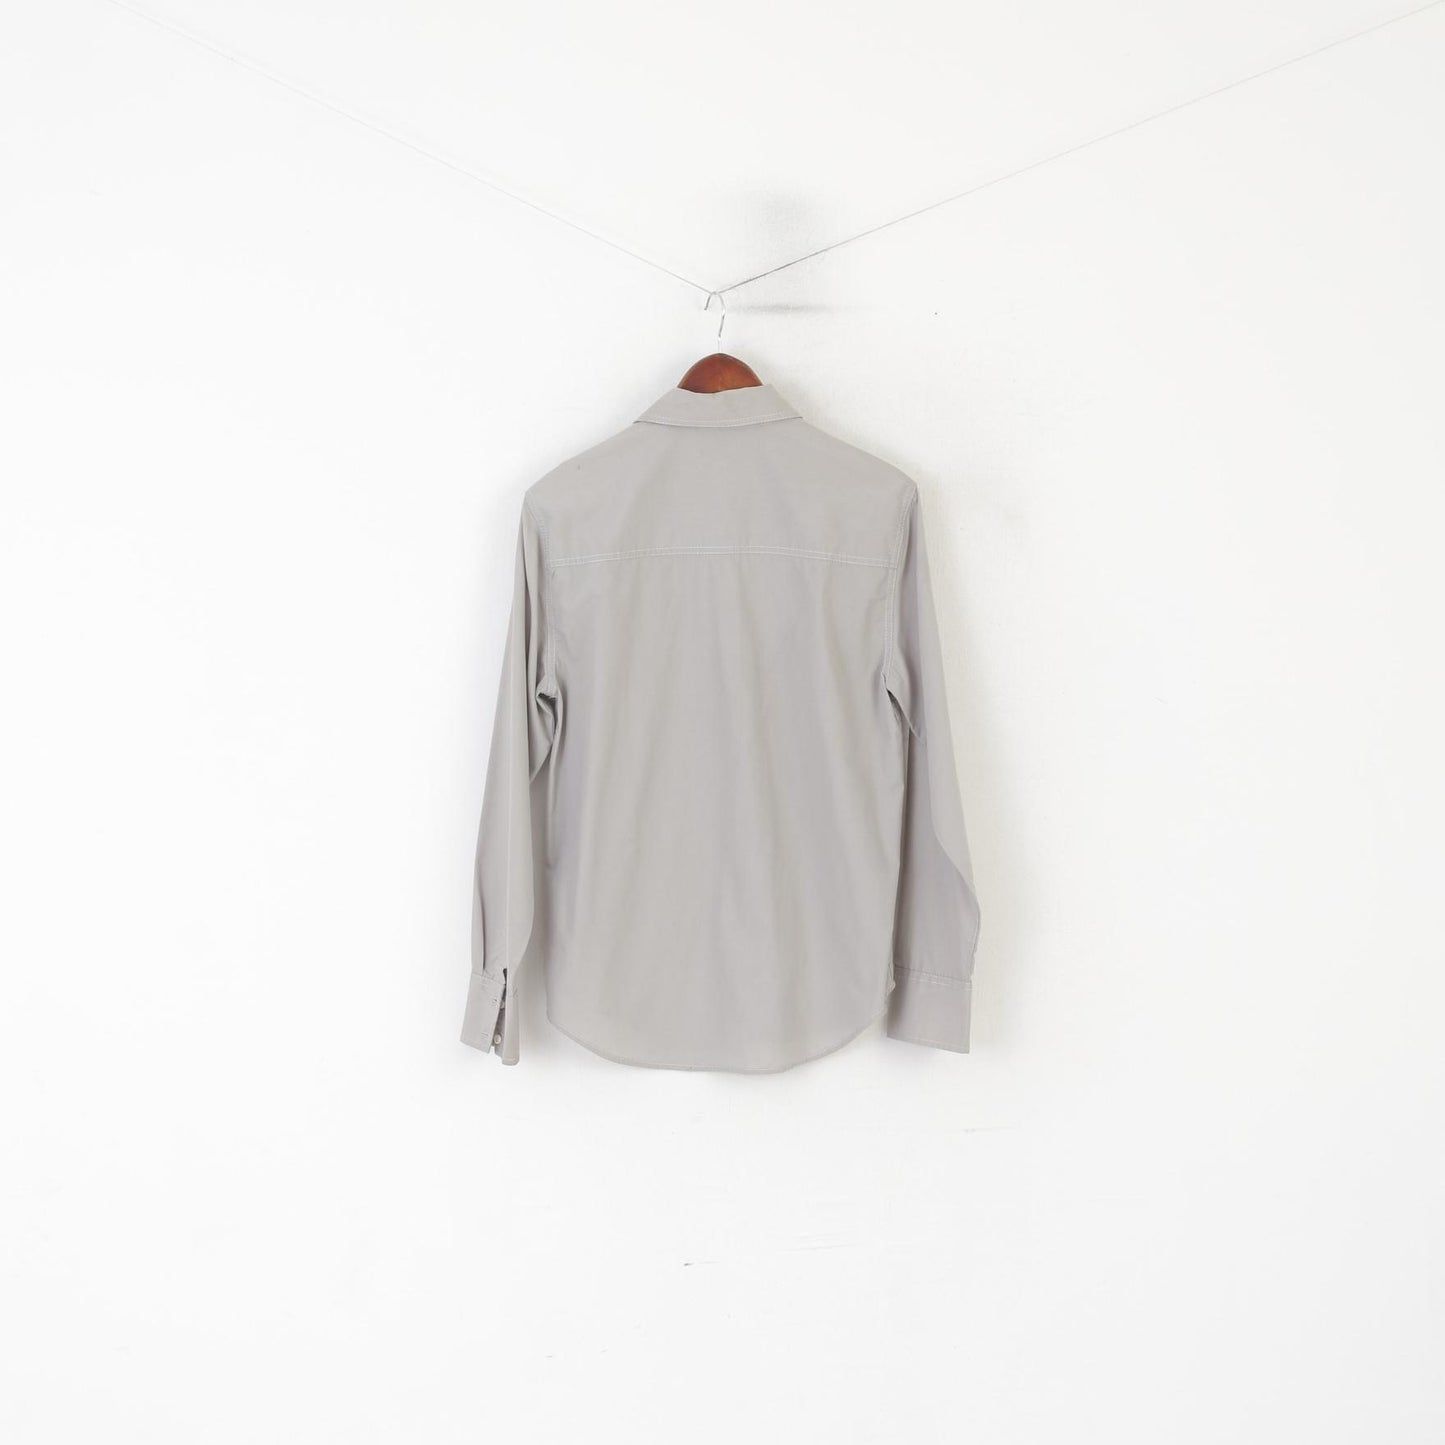 Levi's Signature Men S Casual Shirt Gray Cotton Custom Fit Long Sleeve Pocket Top